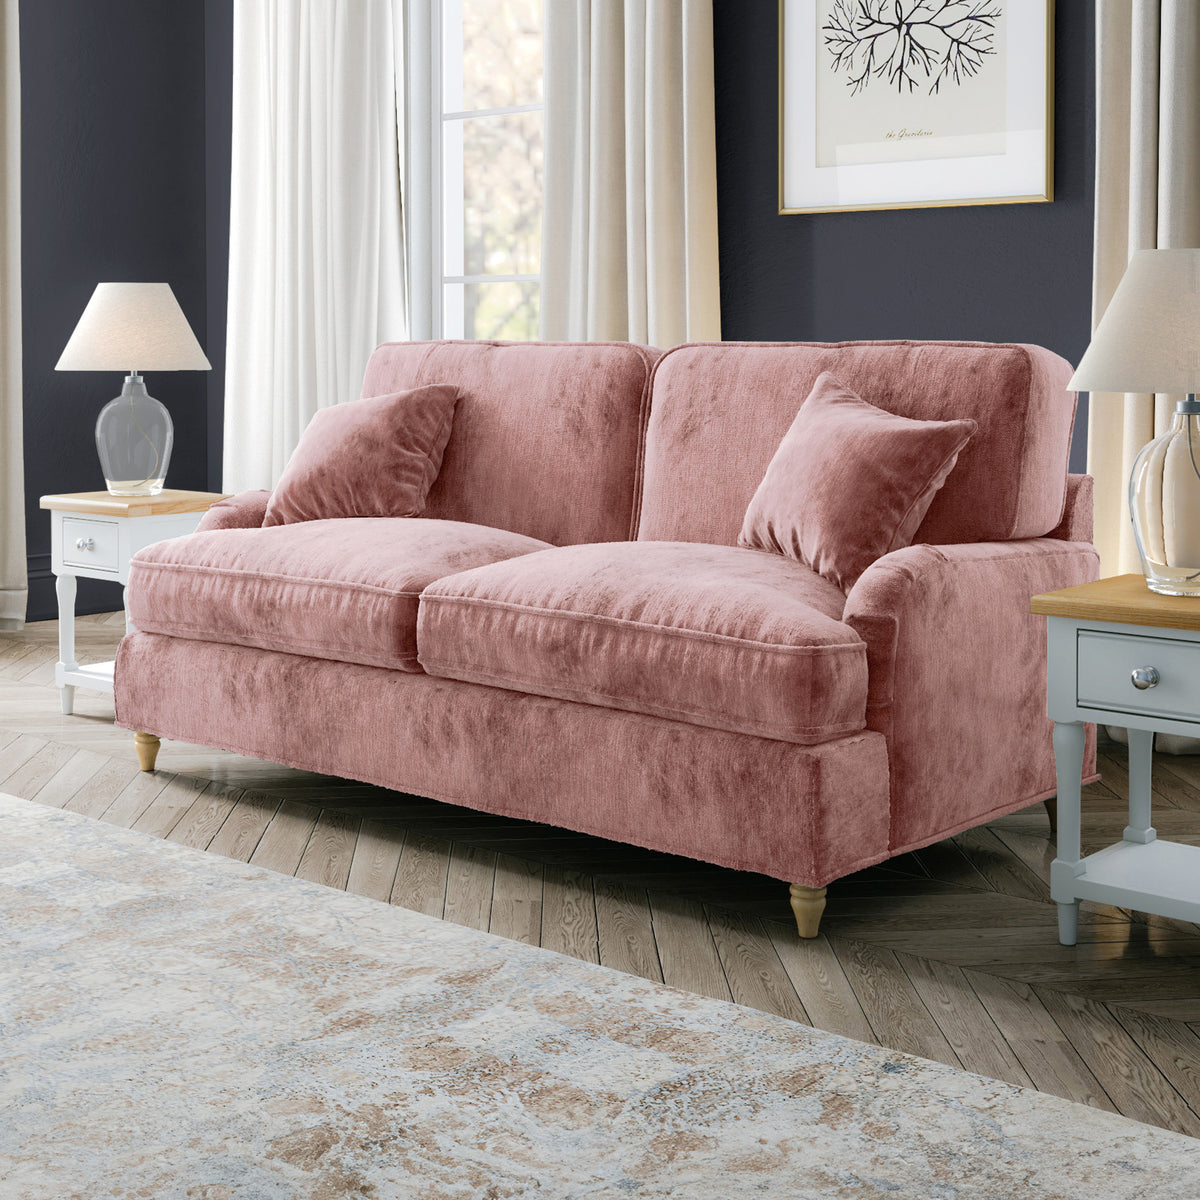 Arthur Plum Pink 3 Seater Sofa from Roseland Furniture